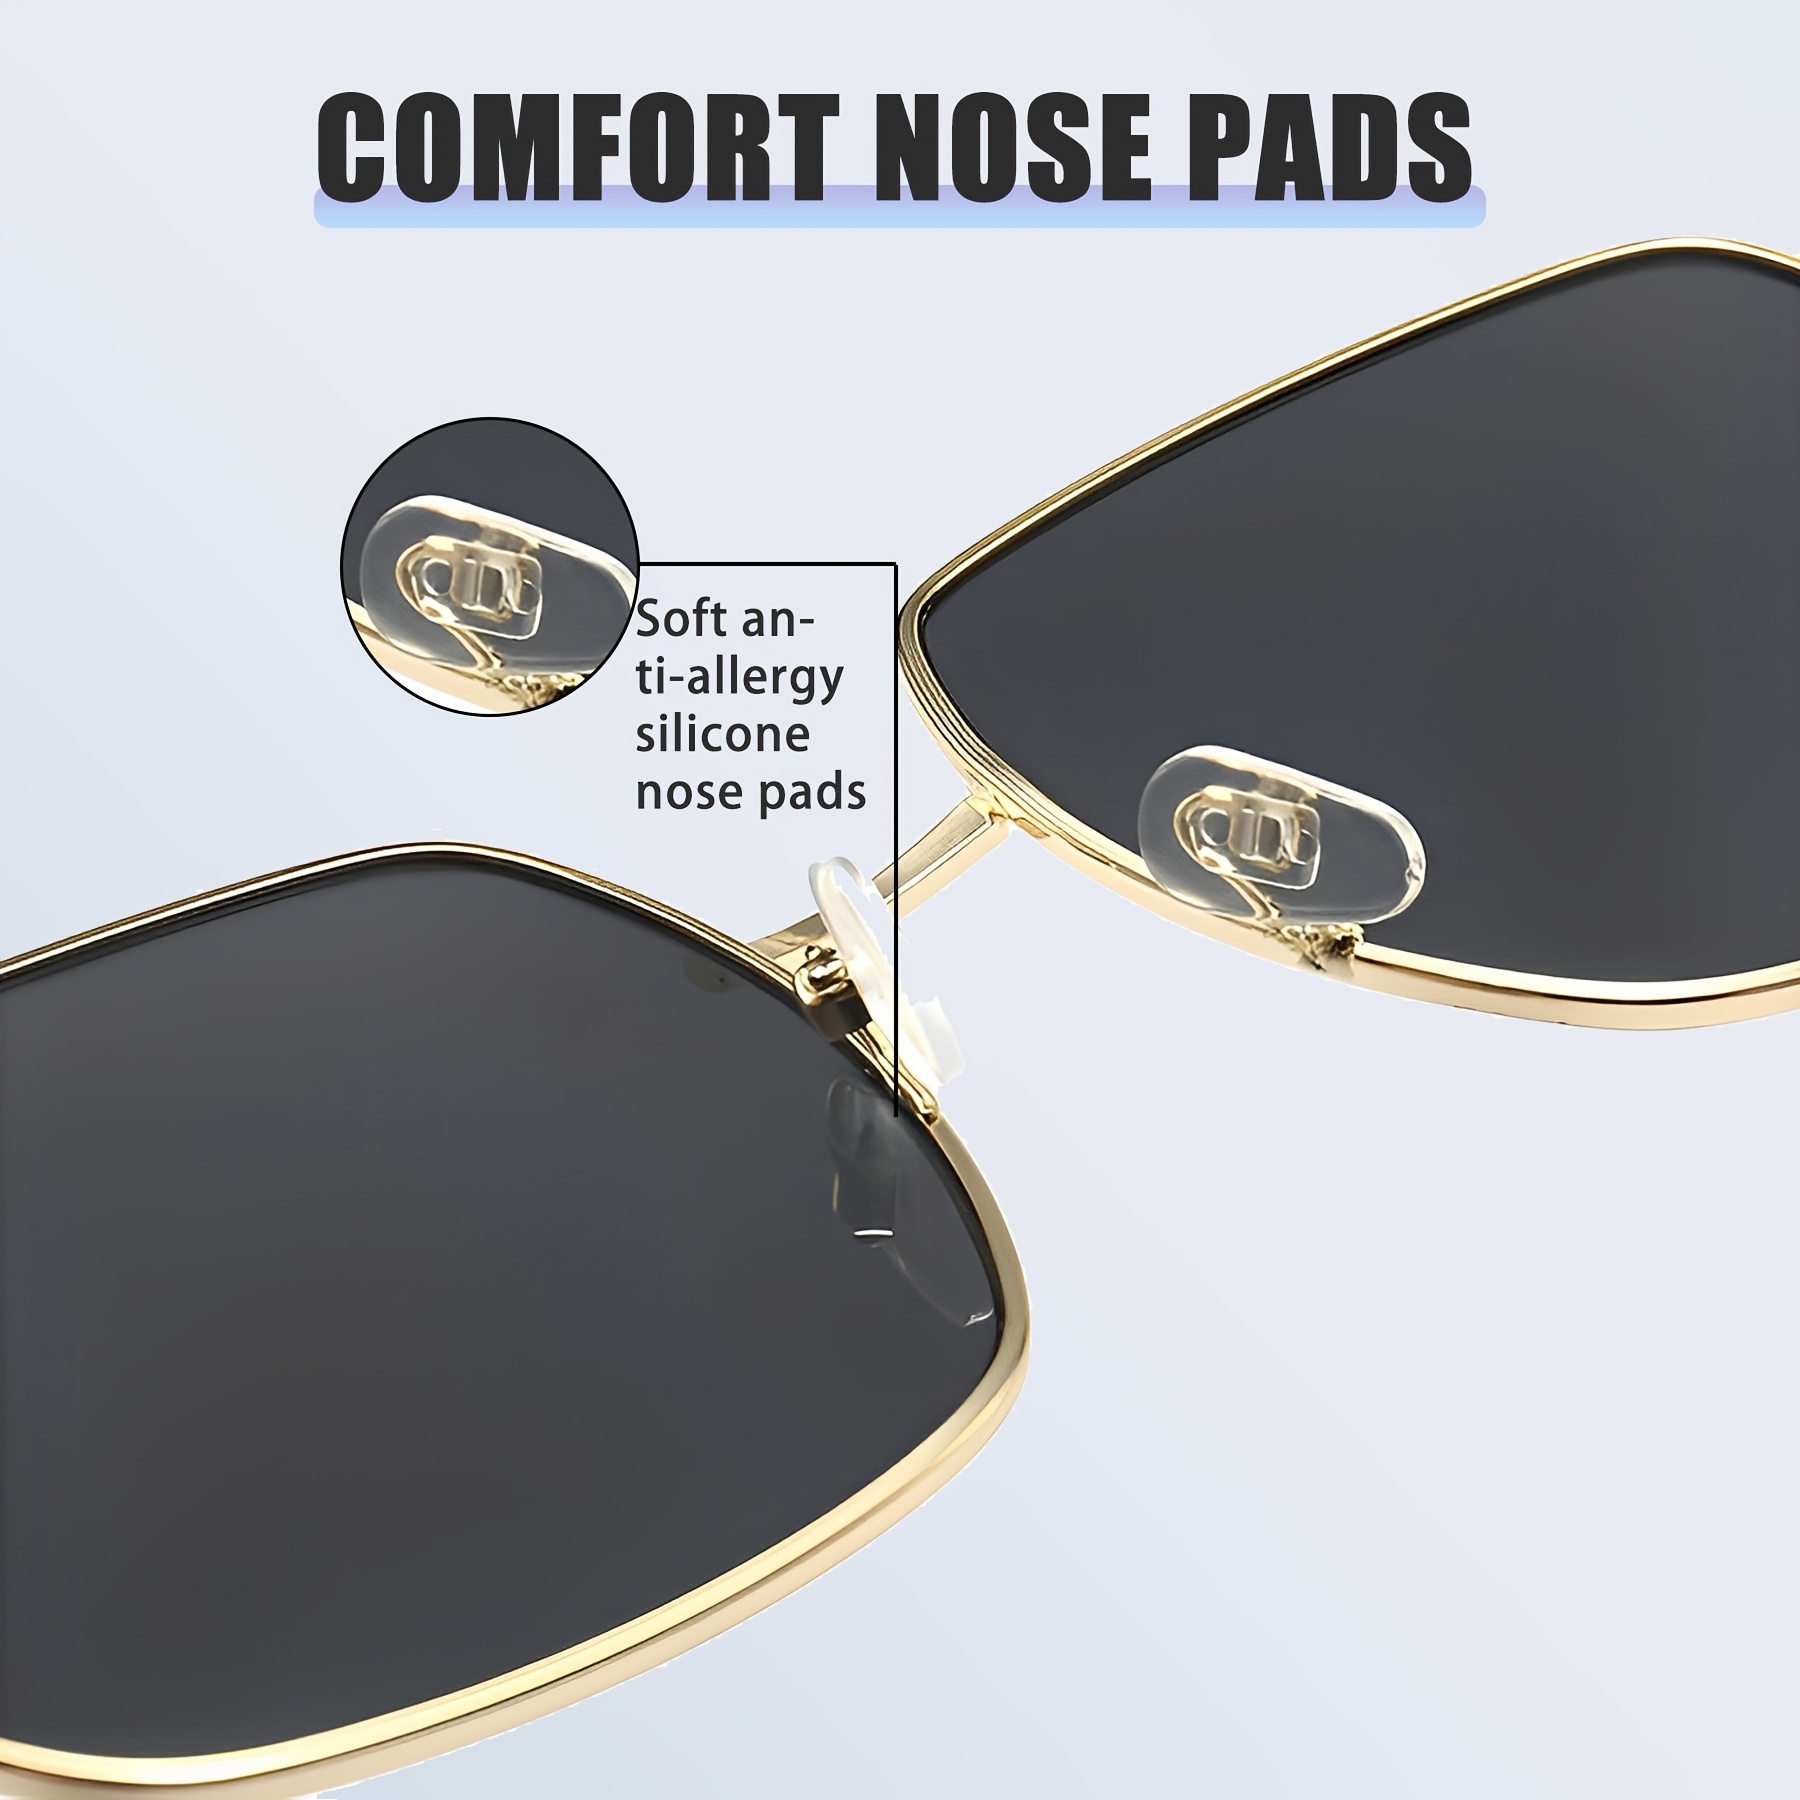 Trendy Large Frame Metal Glasses Elegant Driving Gradient Color Lens  Sunglasses Lightweight Travel Camping Accessories For Men Women, Shop Now  For Limited-time Deals